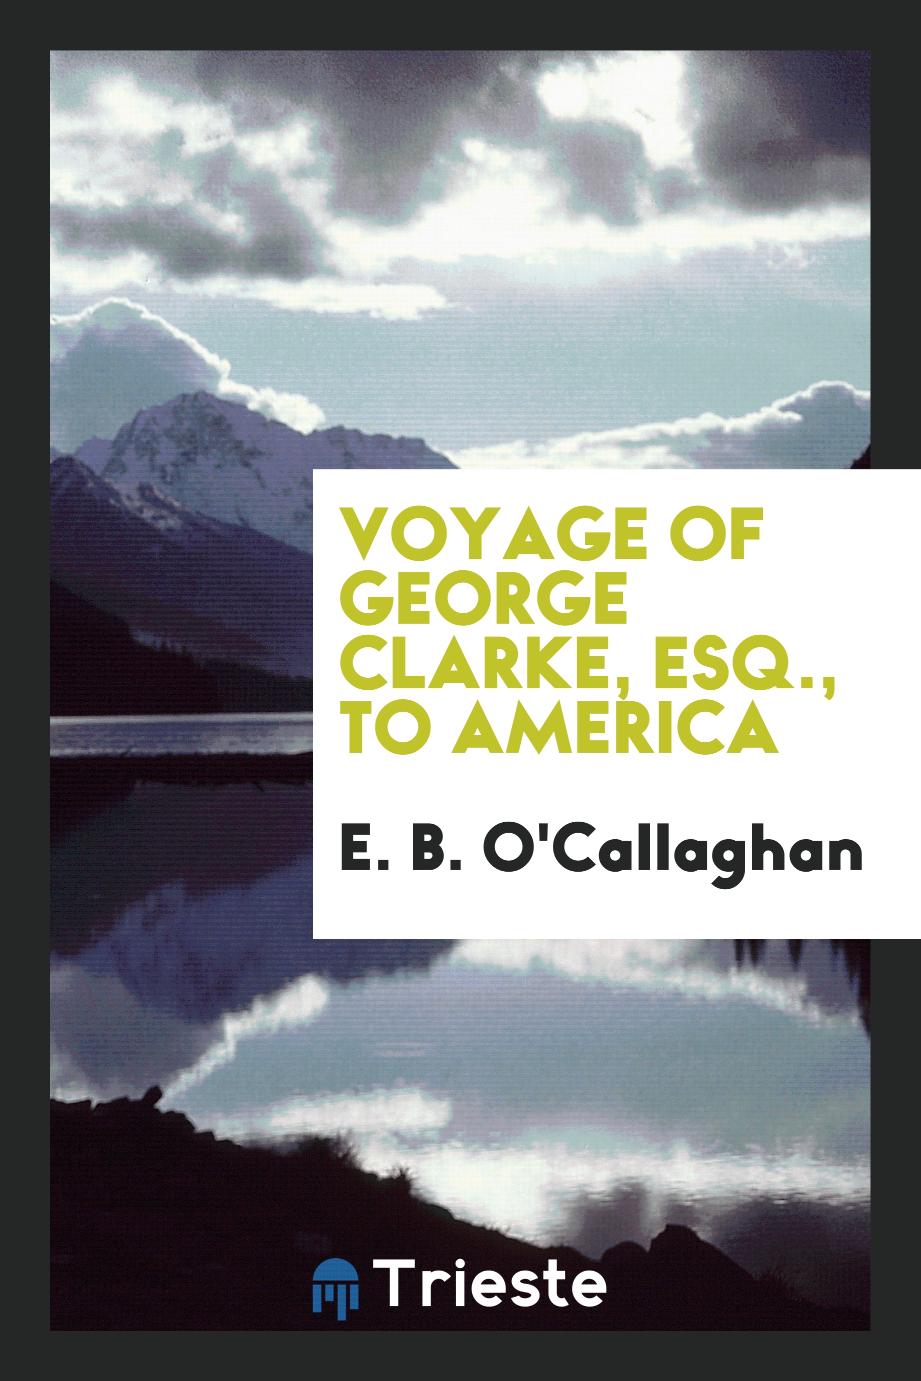 Voyage of George Clarke, esq., to America